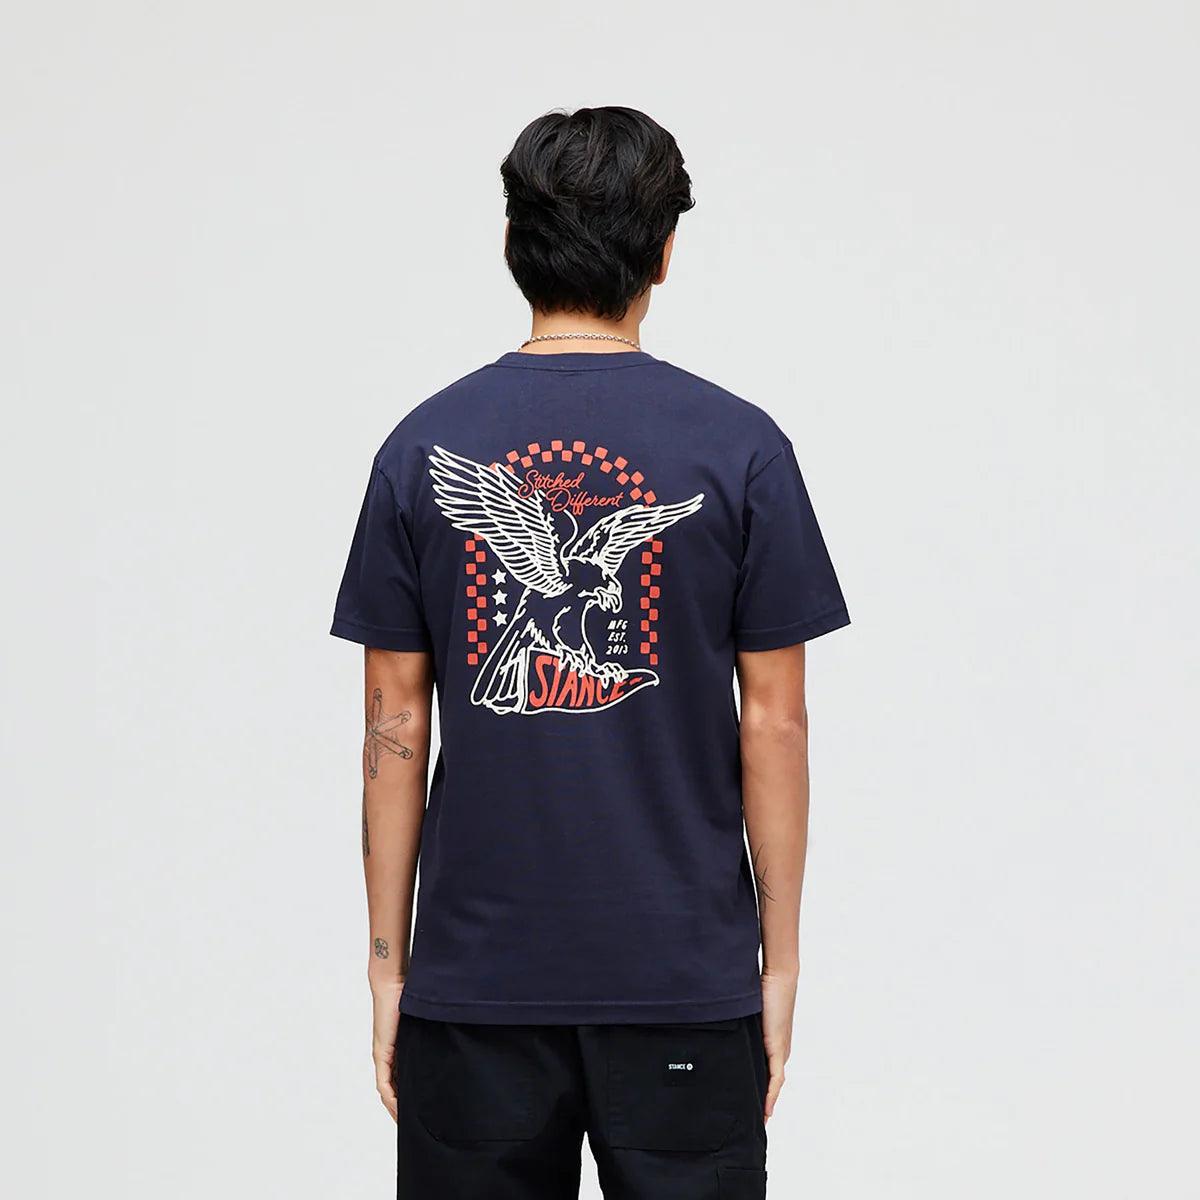 Camiseta Stance Free Bird Navy - ECRU